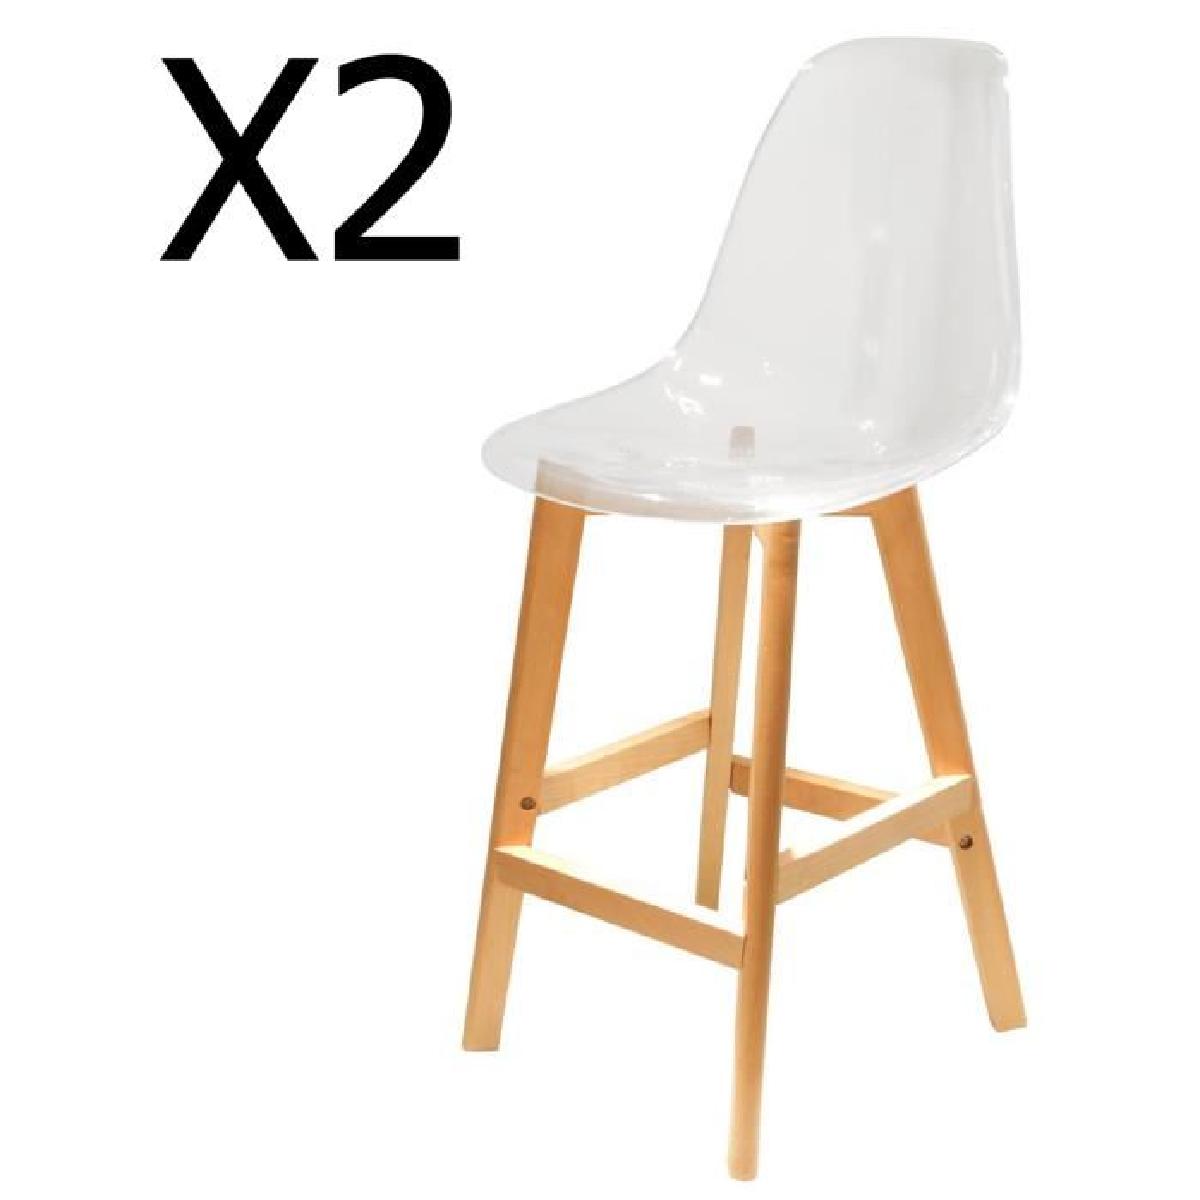 Comparatif chaise scandinave